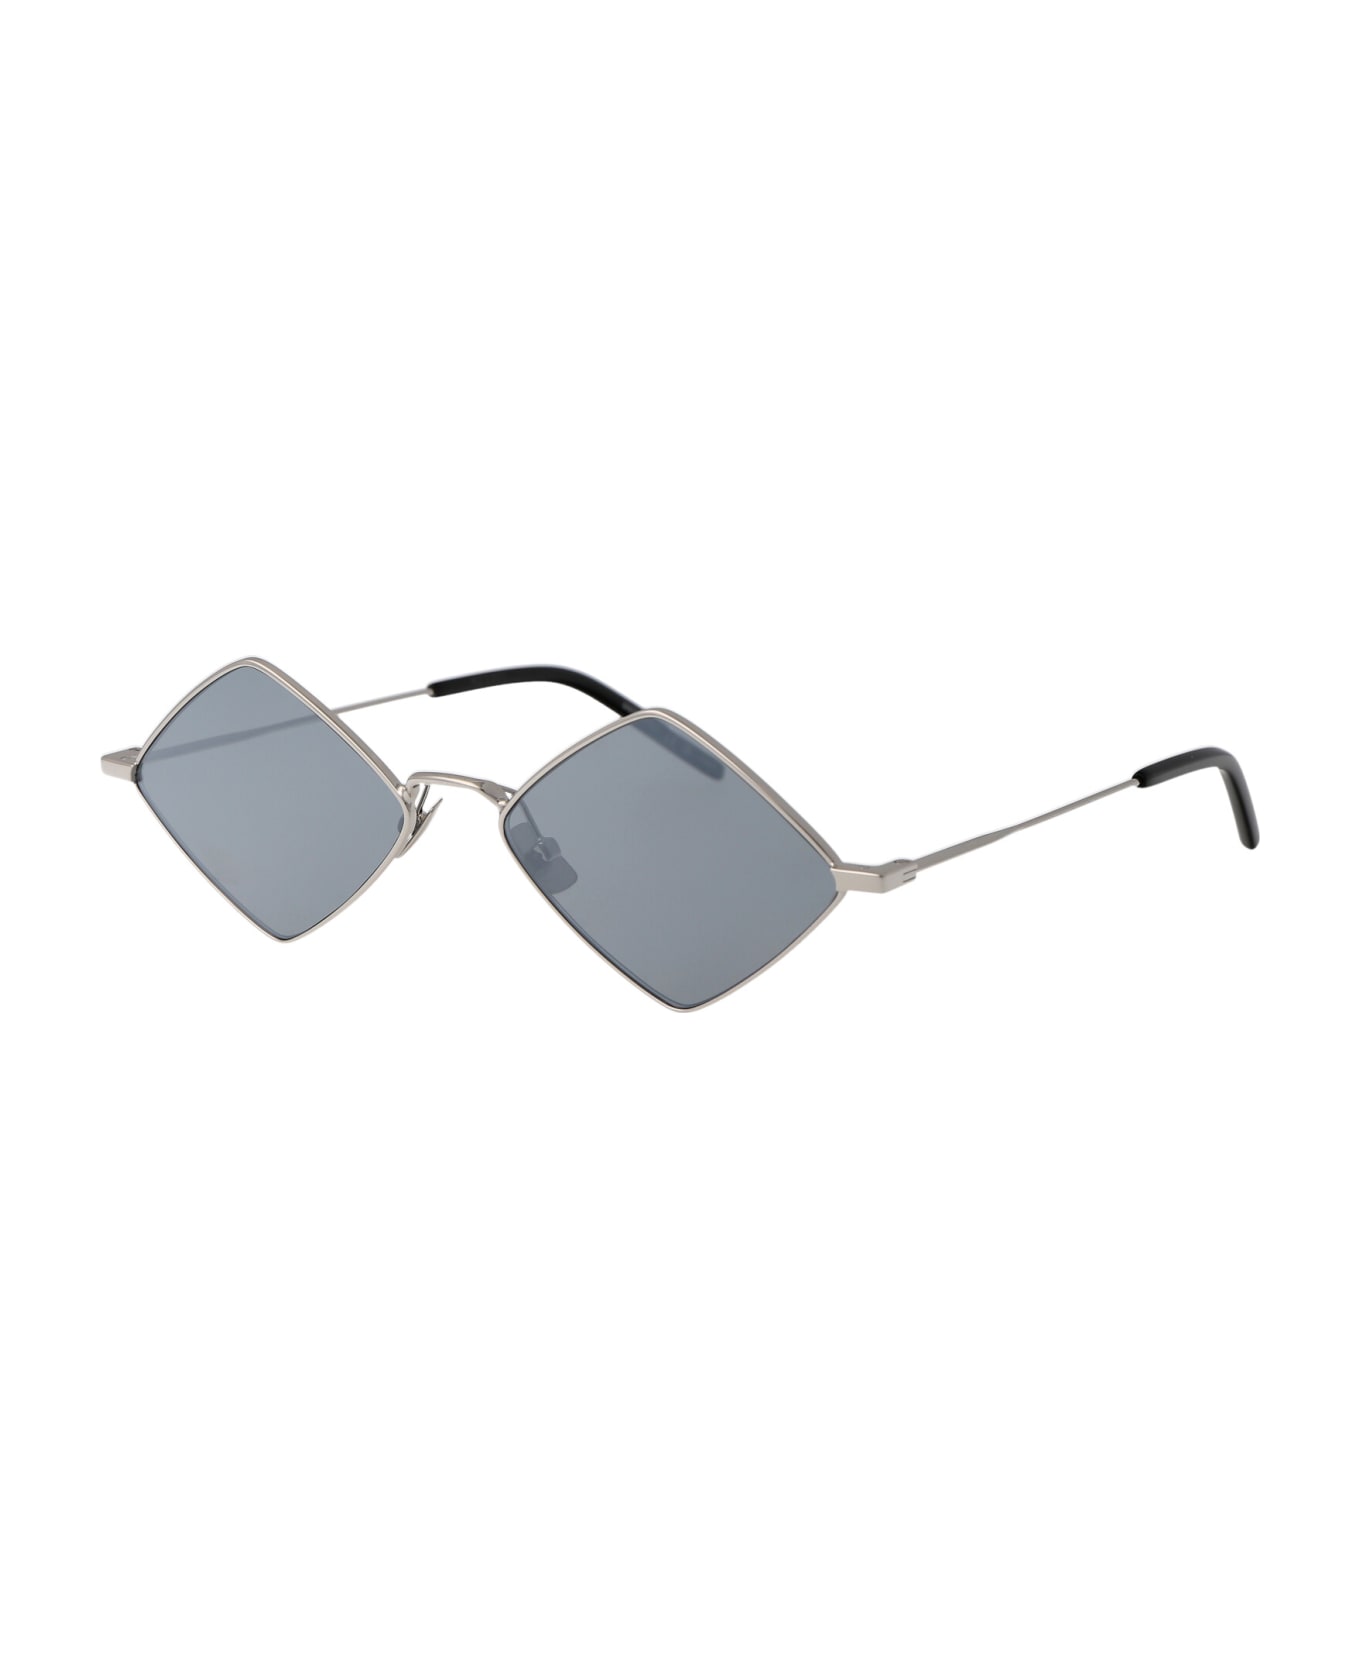 Saint Laurent Eyewear Sl 302 Lisa Sunglasses - 010 SILVER SILVER SILVER